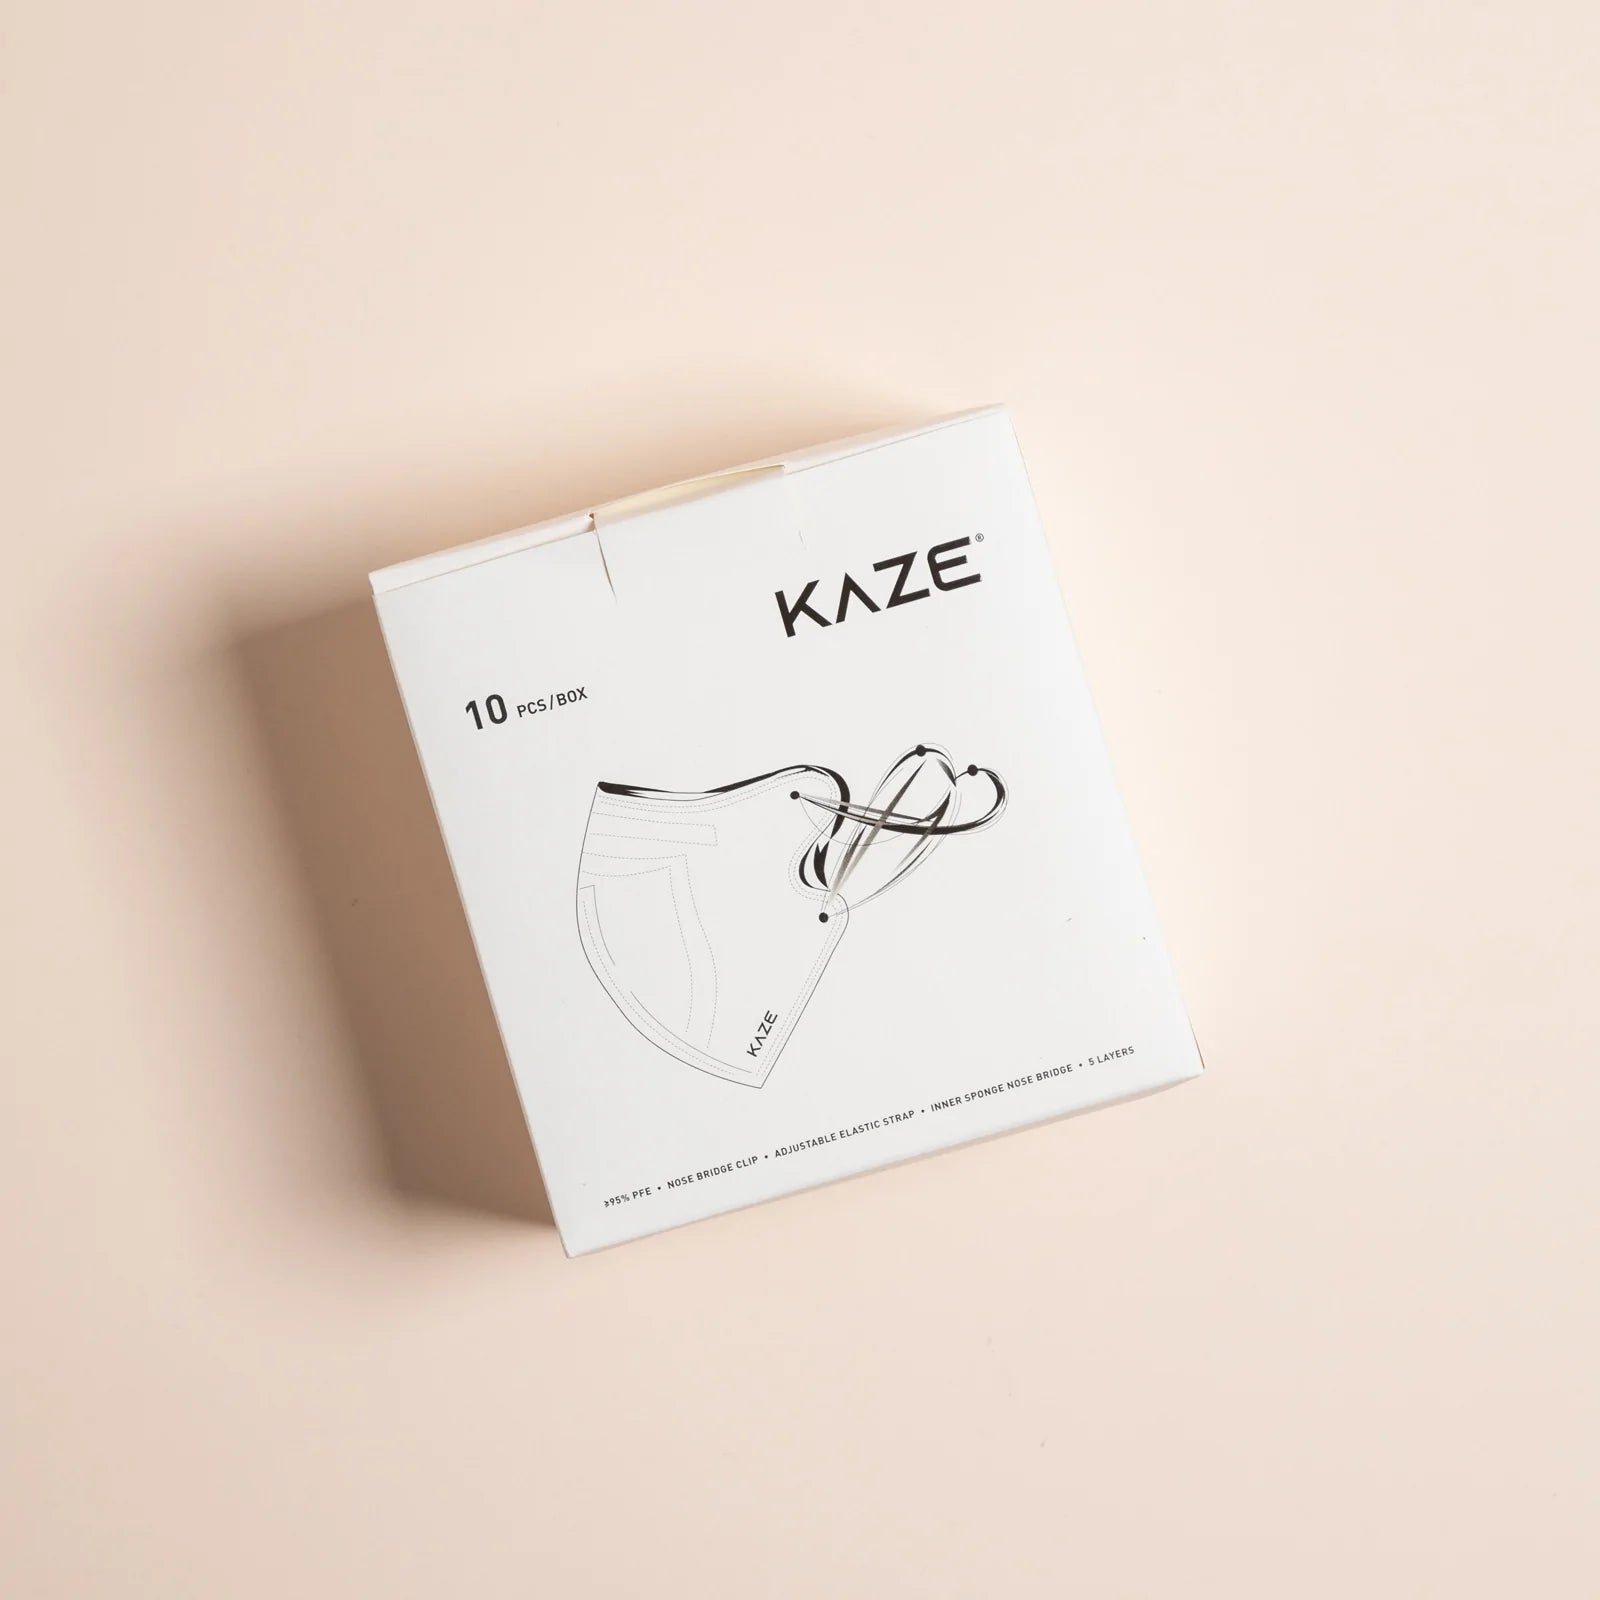 KAZE Masks- Mini Succulent Series